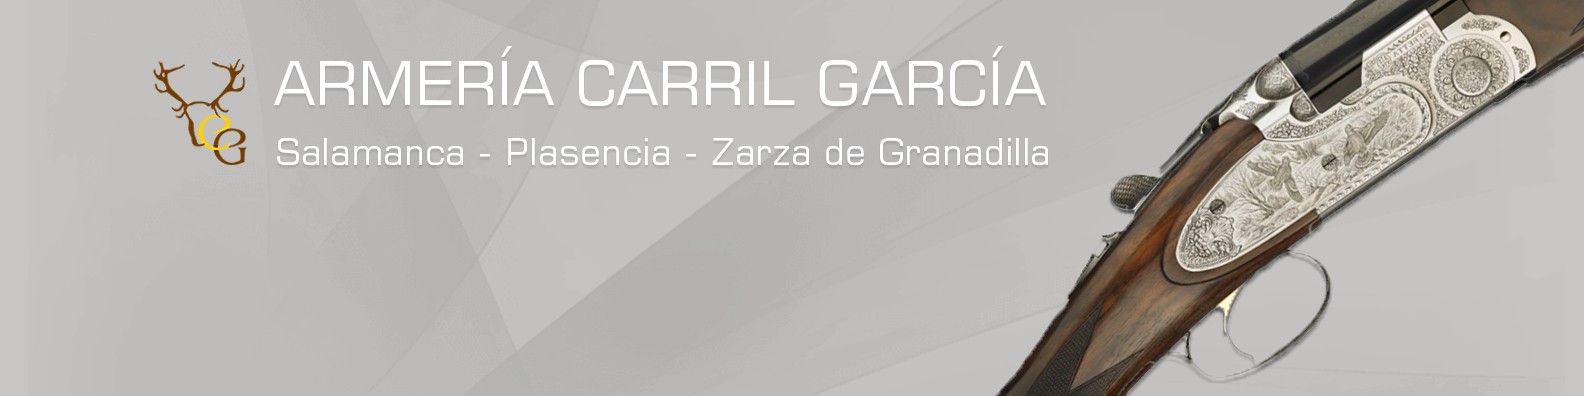 Armería Carril García